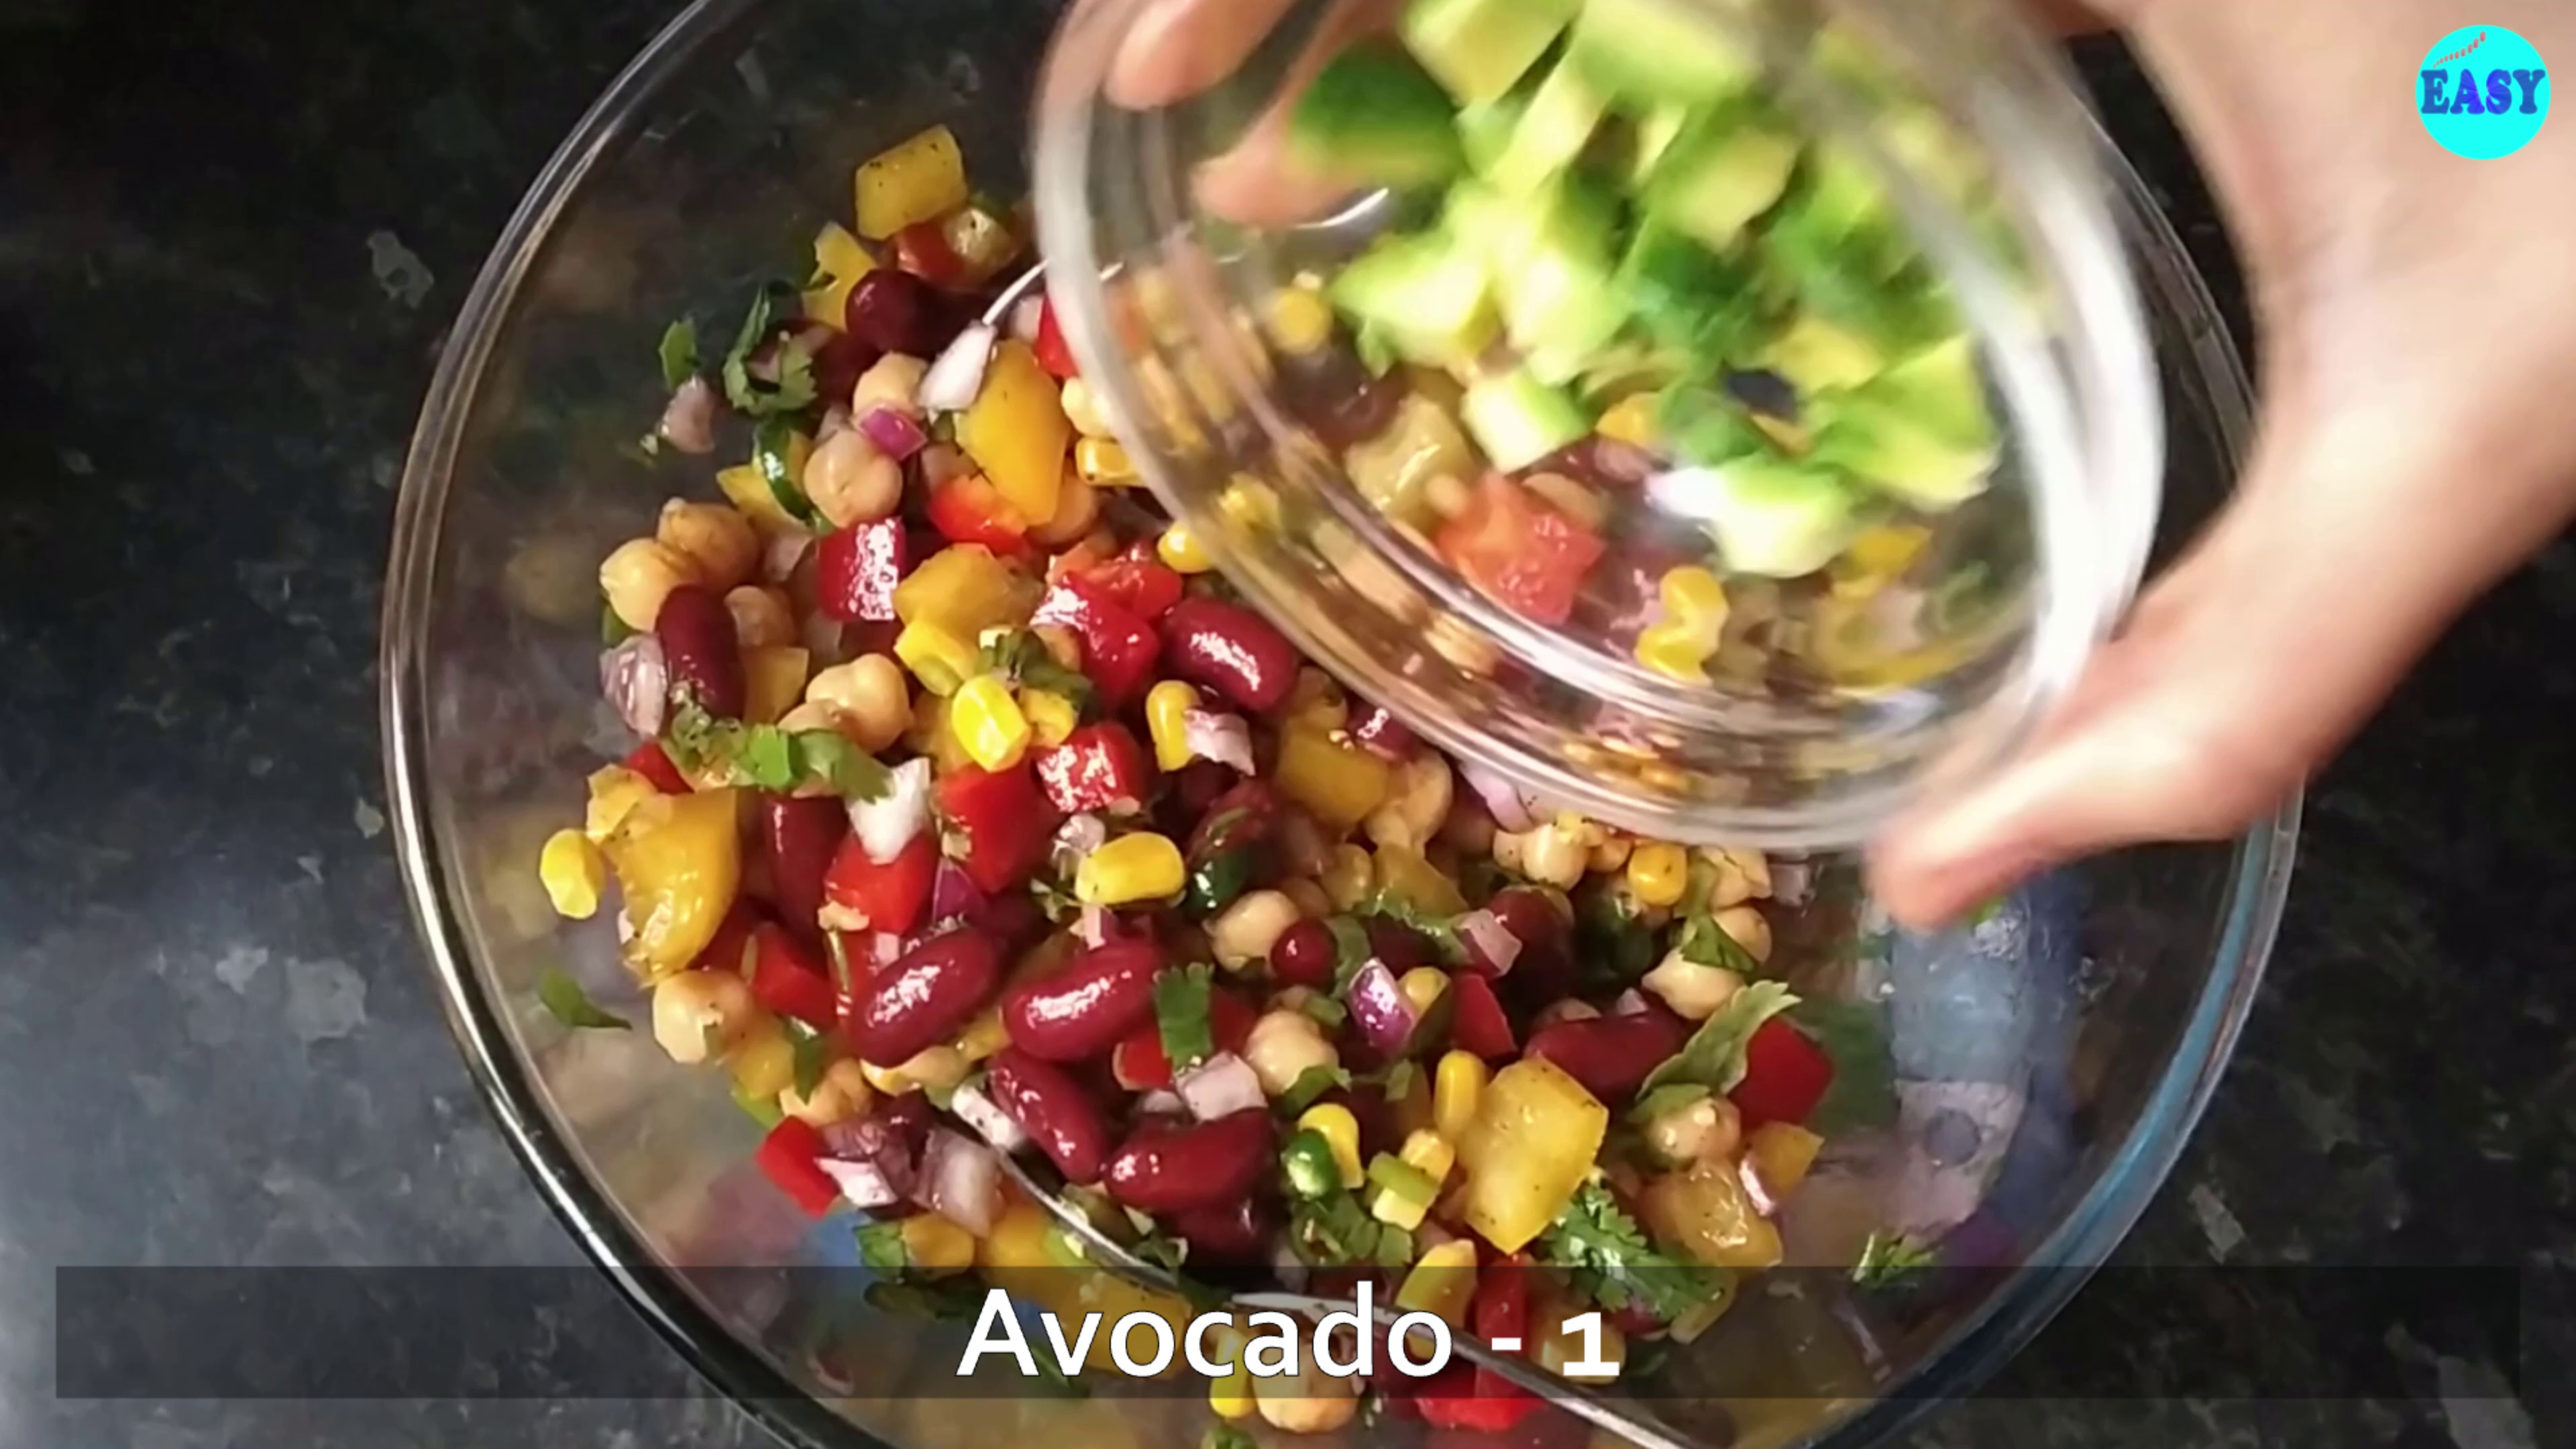 Step 4 - Lastly add the chopped avocado and enjoy!.